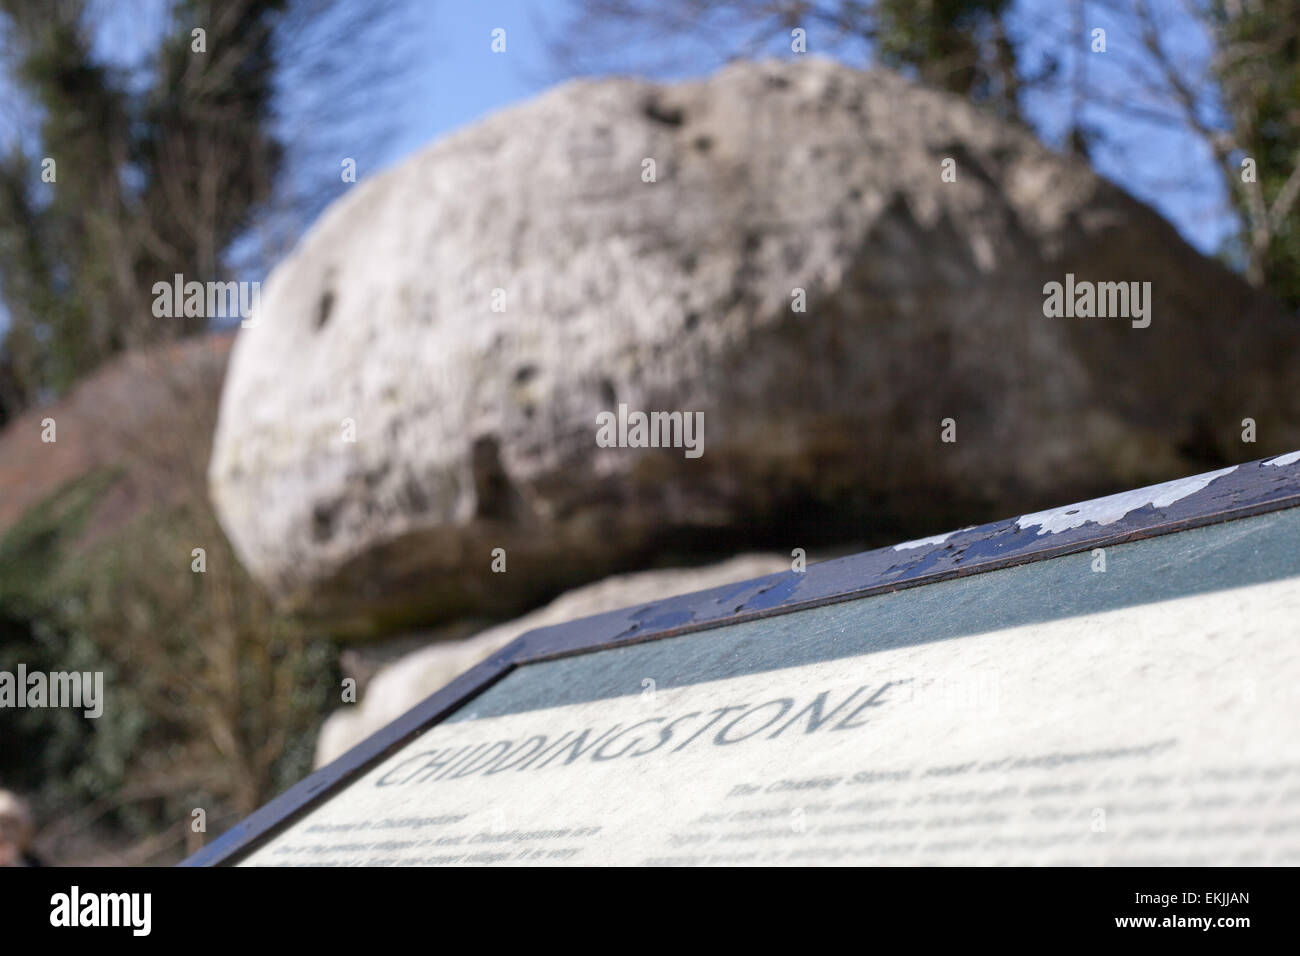 The chiding stone at Chiddingstone, Kent, England. Stock Photo